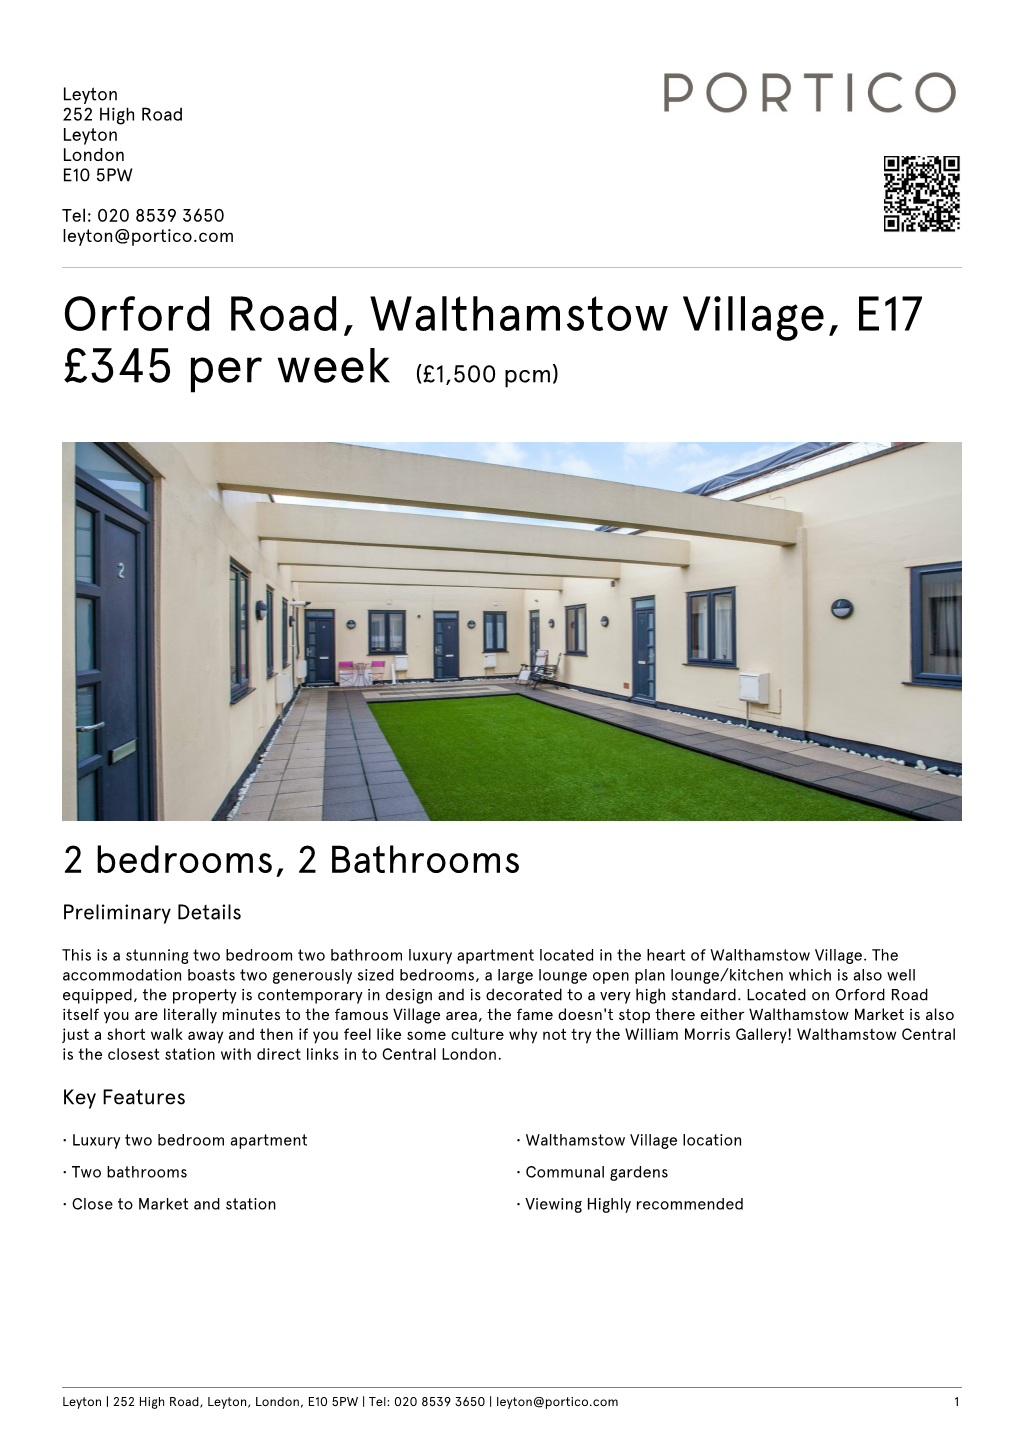 Orford Road, Walthamstow Village, E17 £345 Per Week